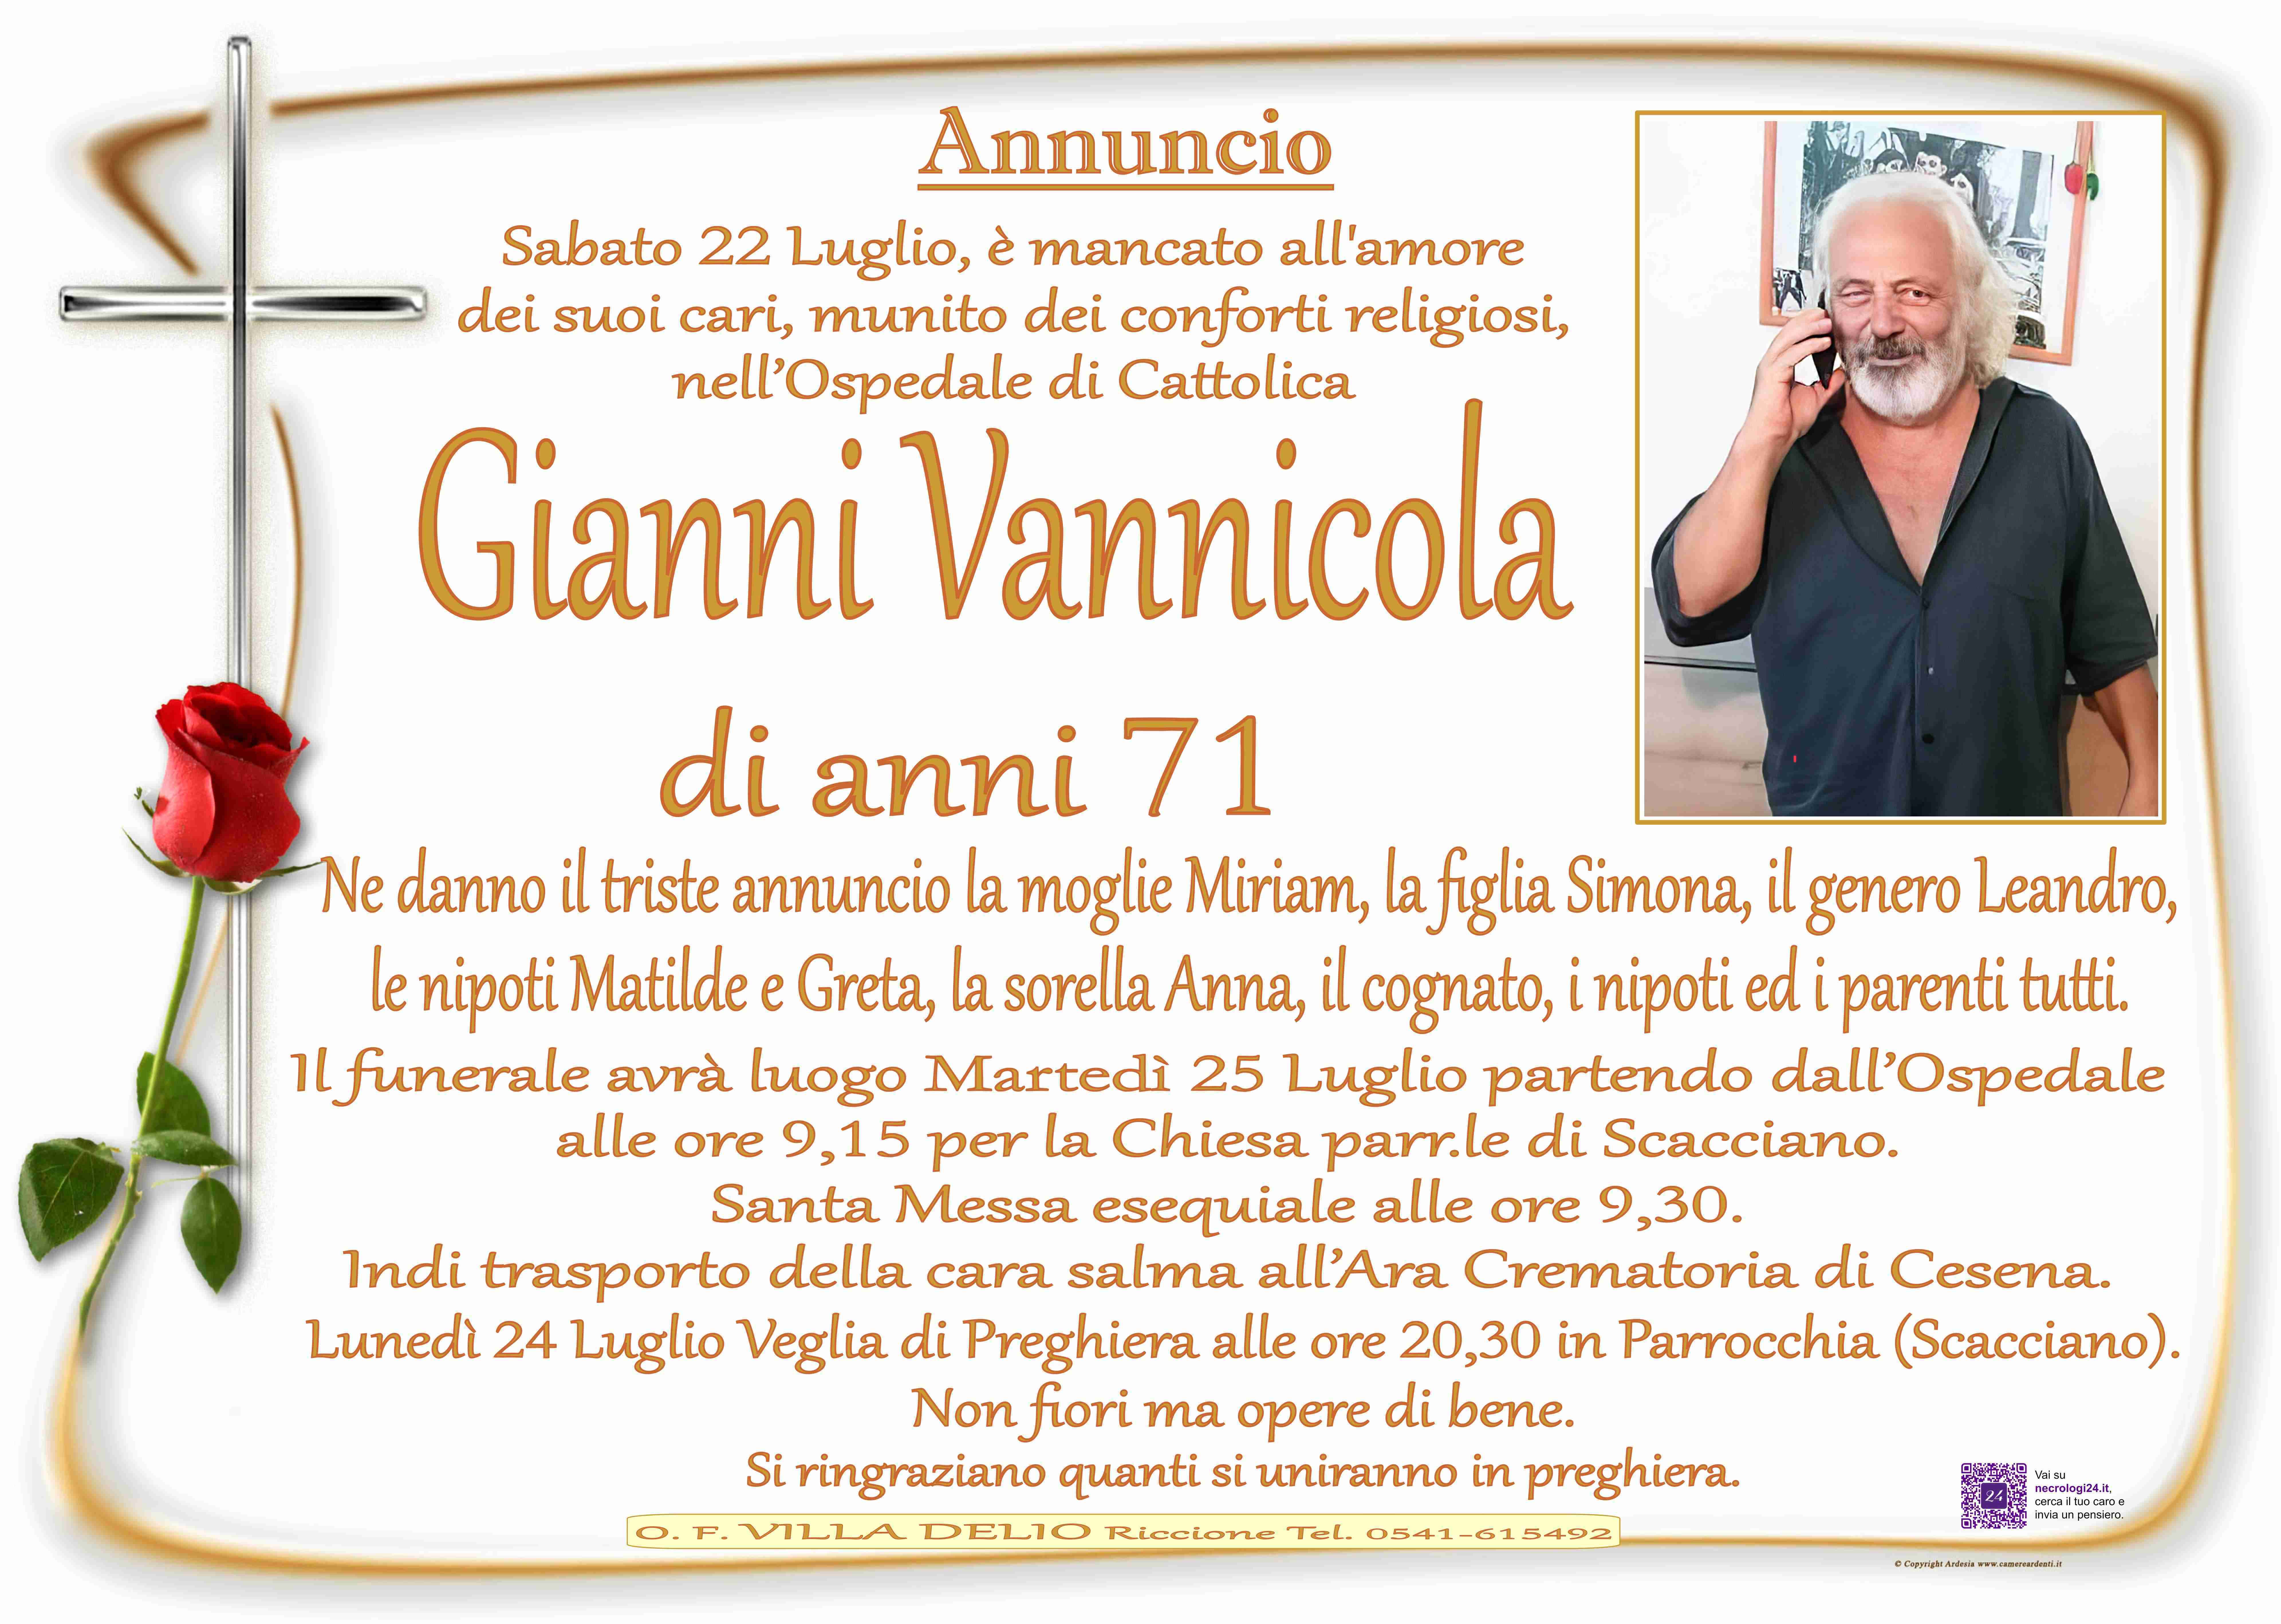 Gianni Vannicola